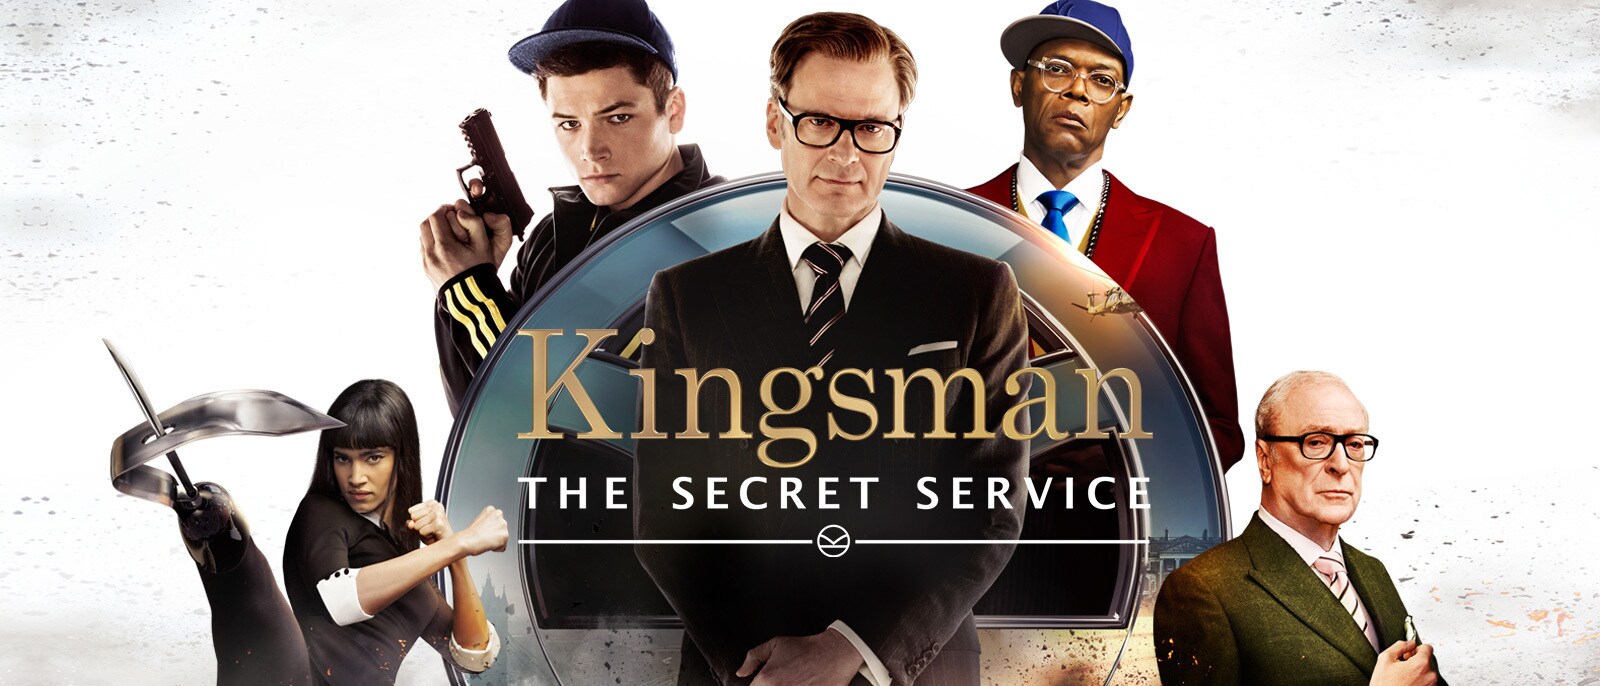 33-facts-about-the-movie-kingsman-the-secret-service